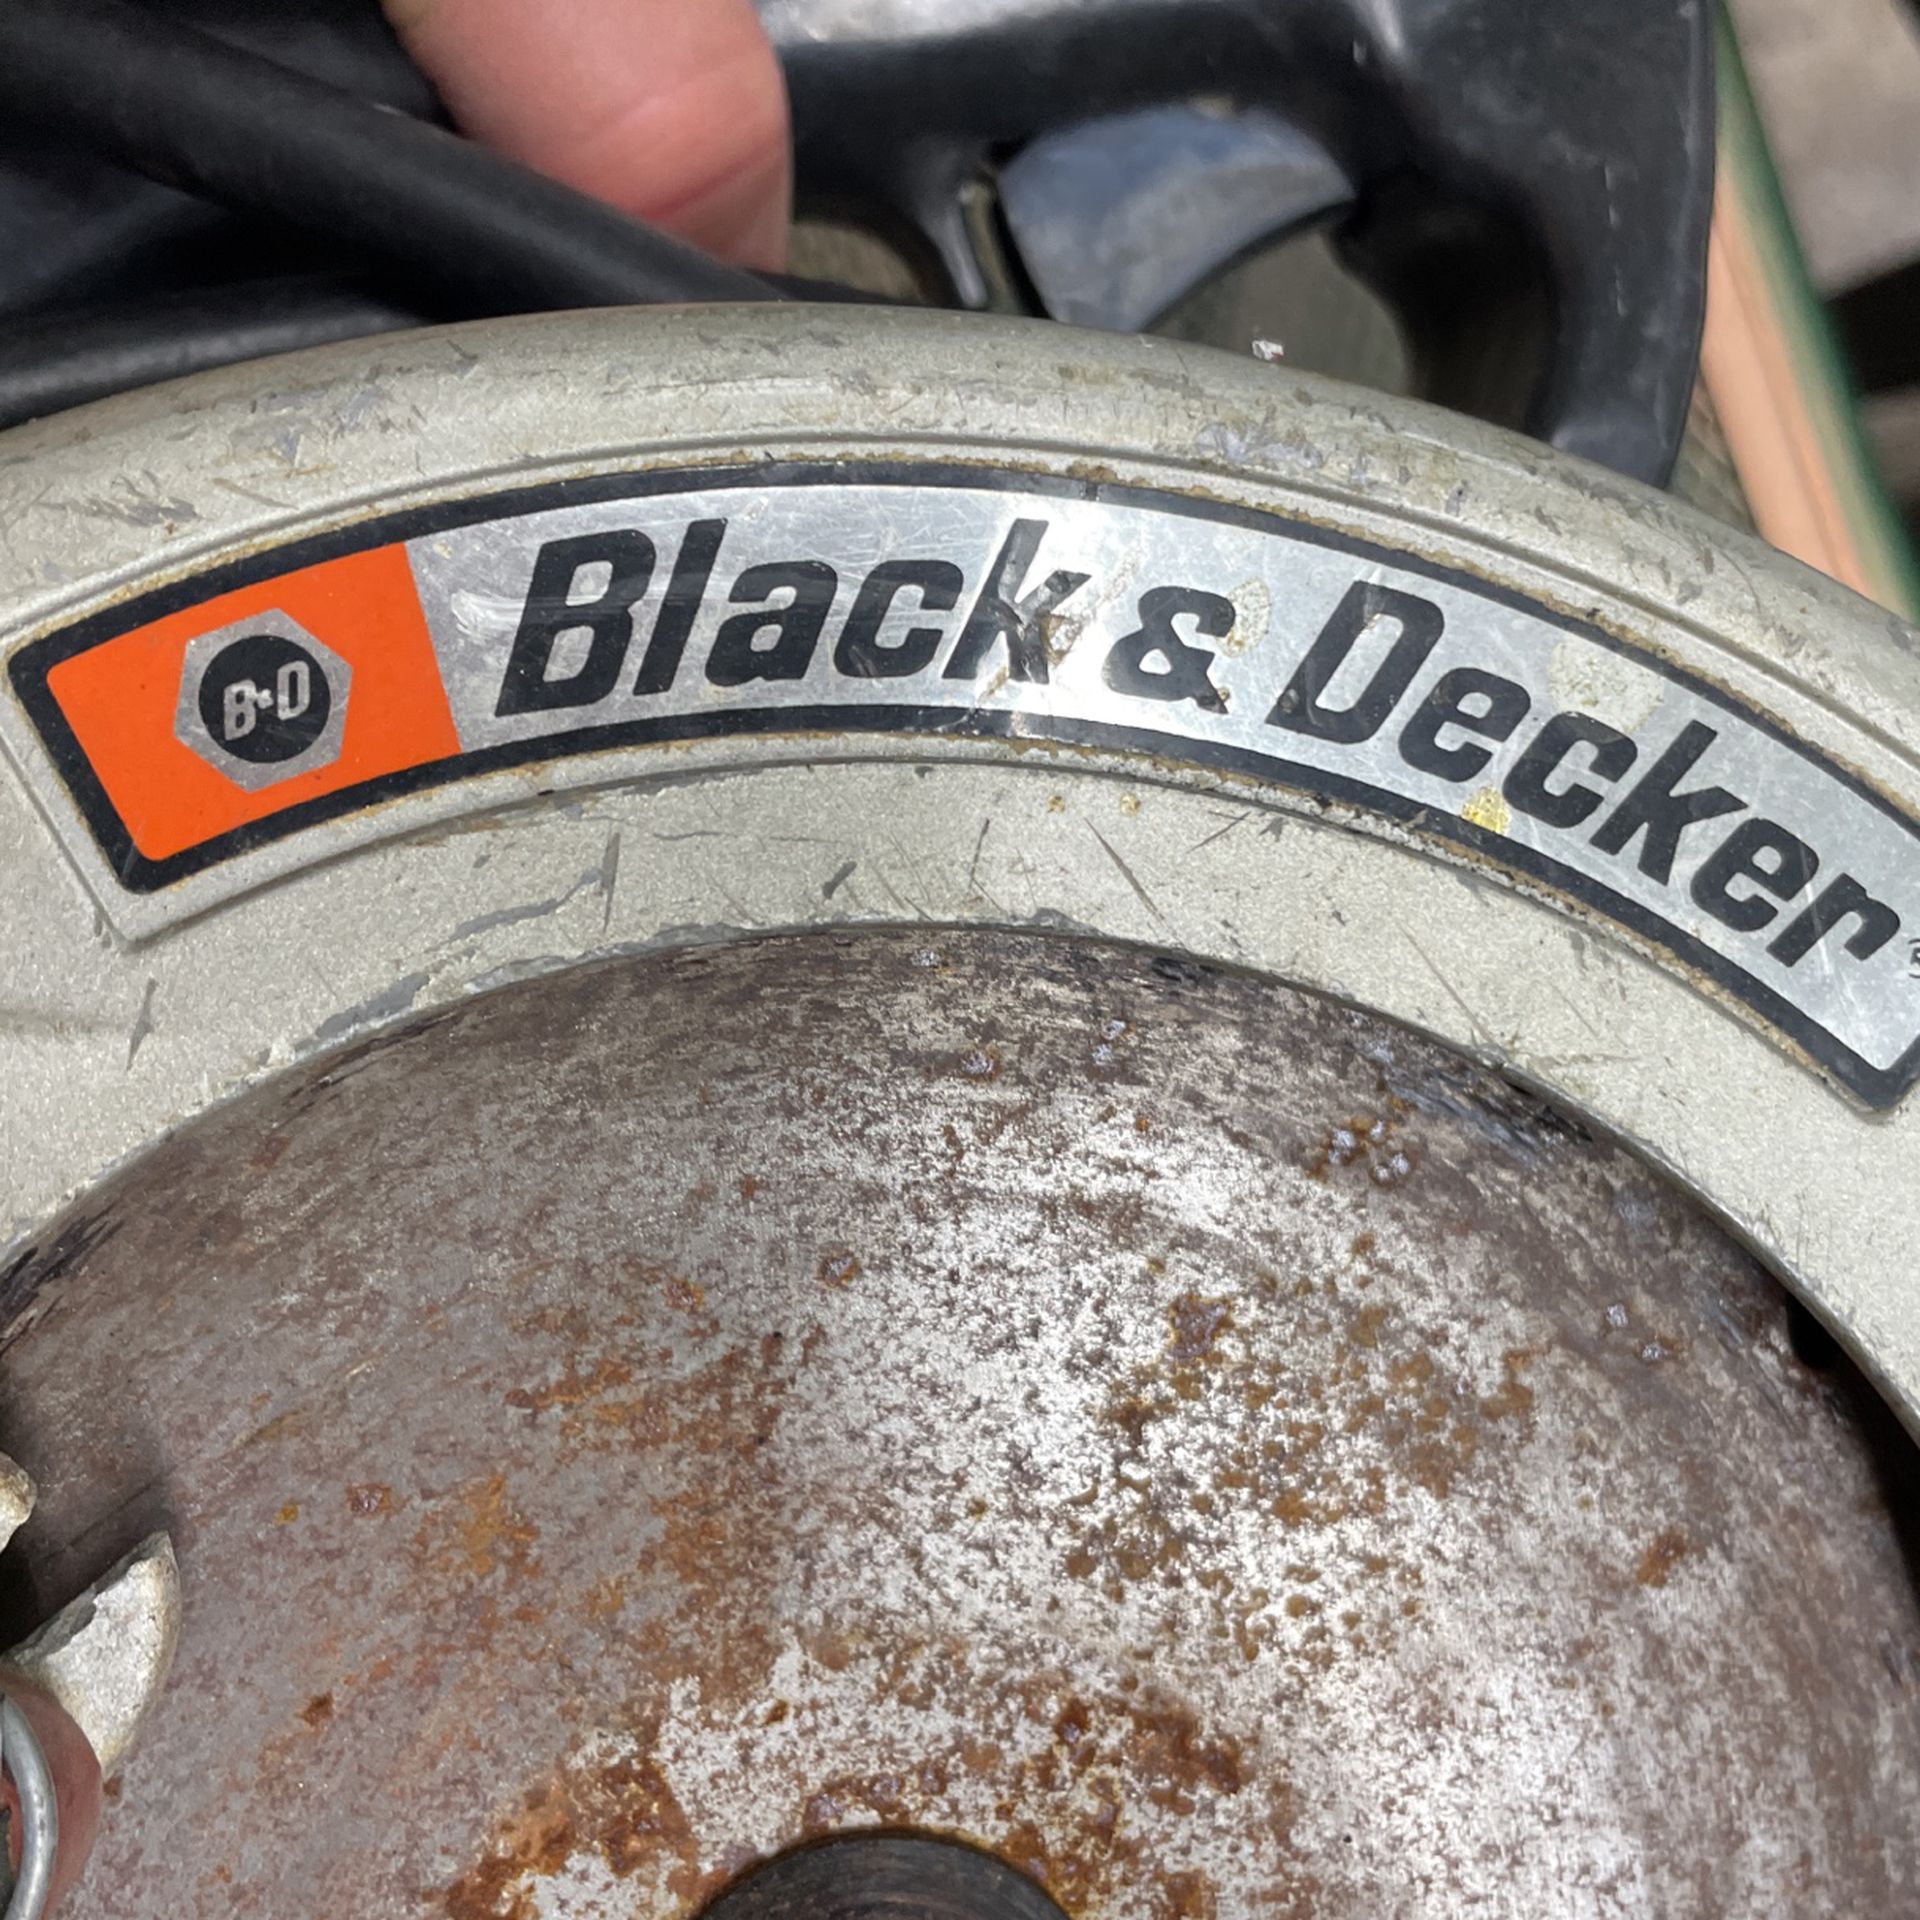 Black & Decker Super SawCat 3064 7 1/4 Circular Saw with Brake for Sale in  Bridgeport, CT - OfferUp